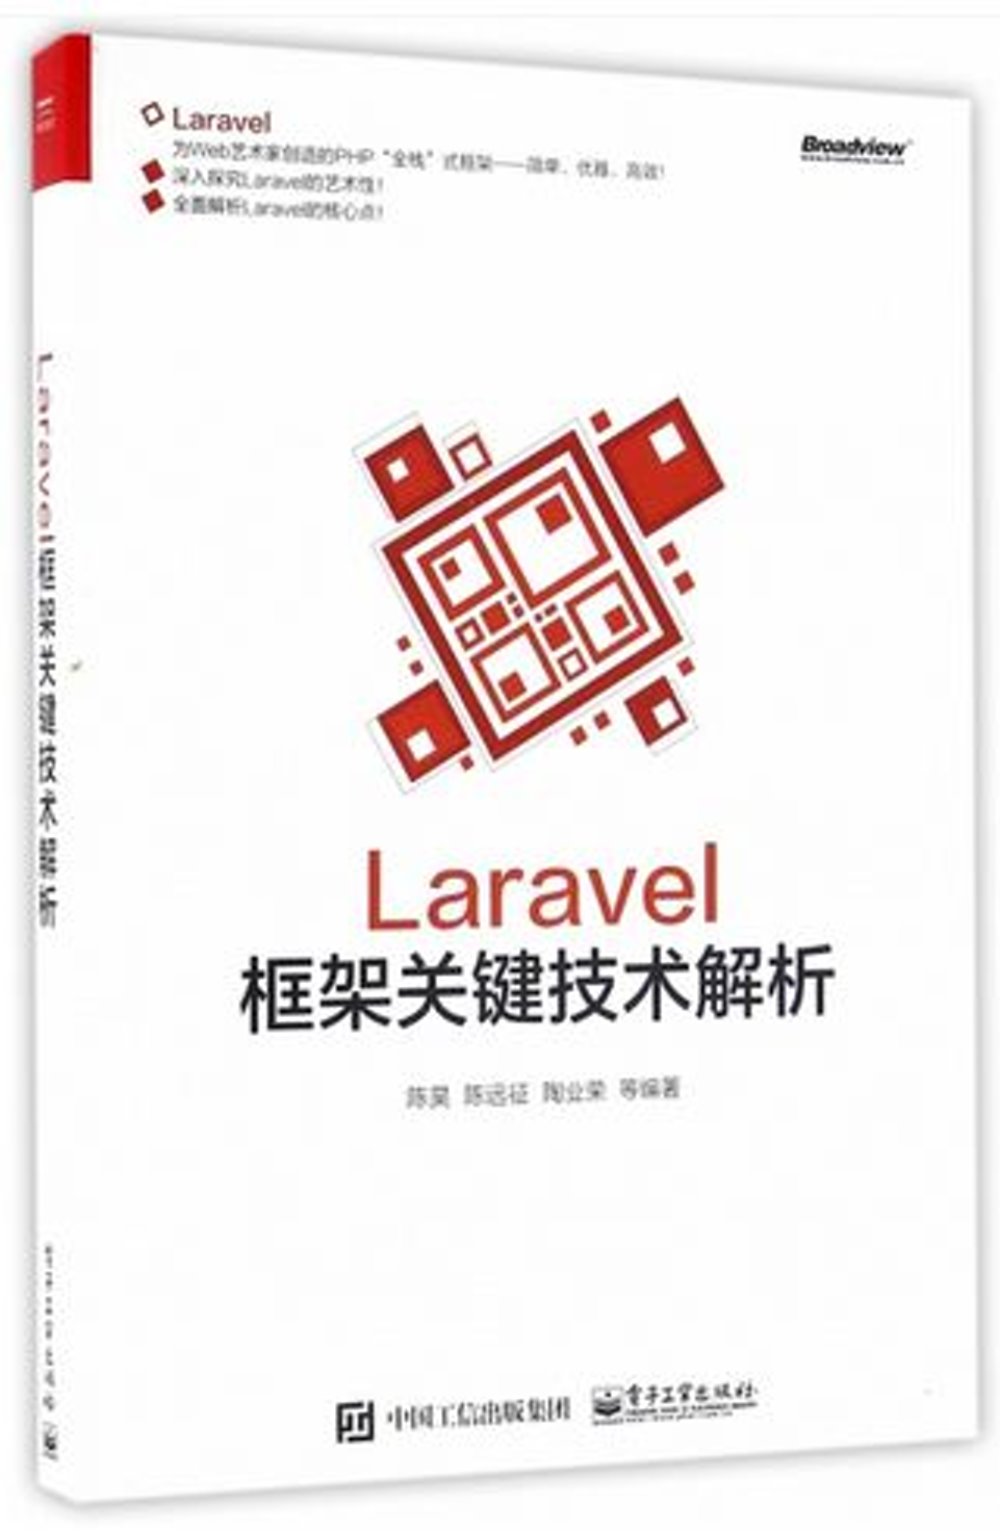 Laravel框架關鍵技術解析